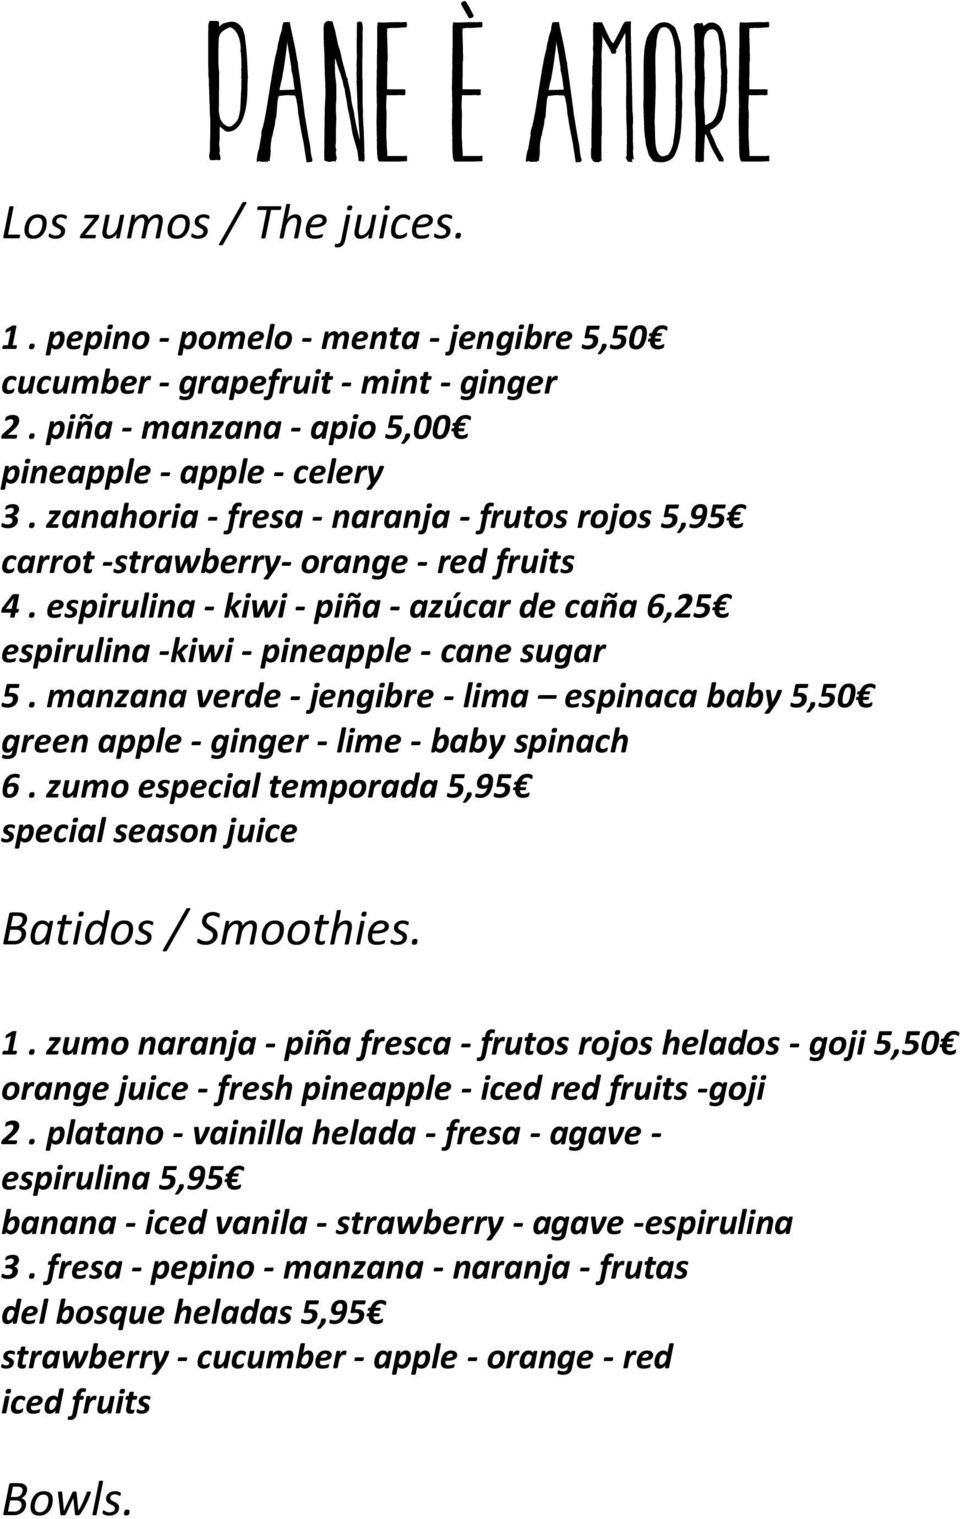 manzana verde - jengibre - lima espinaca baby 5,50 green apple - ginger - lime - baby spinach 6. zumo especial temporada 5,95 special season juice Batidos / Smoothies. 1.